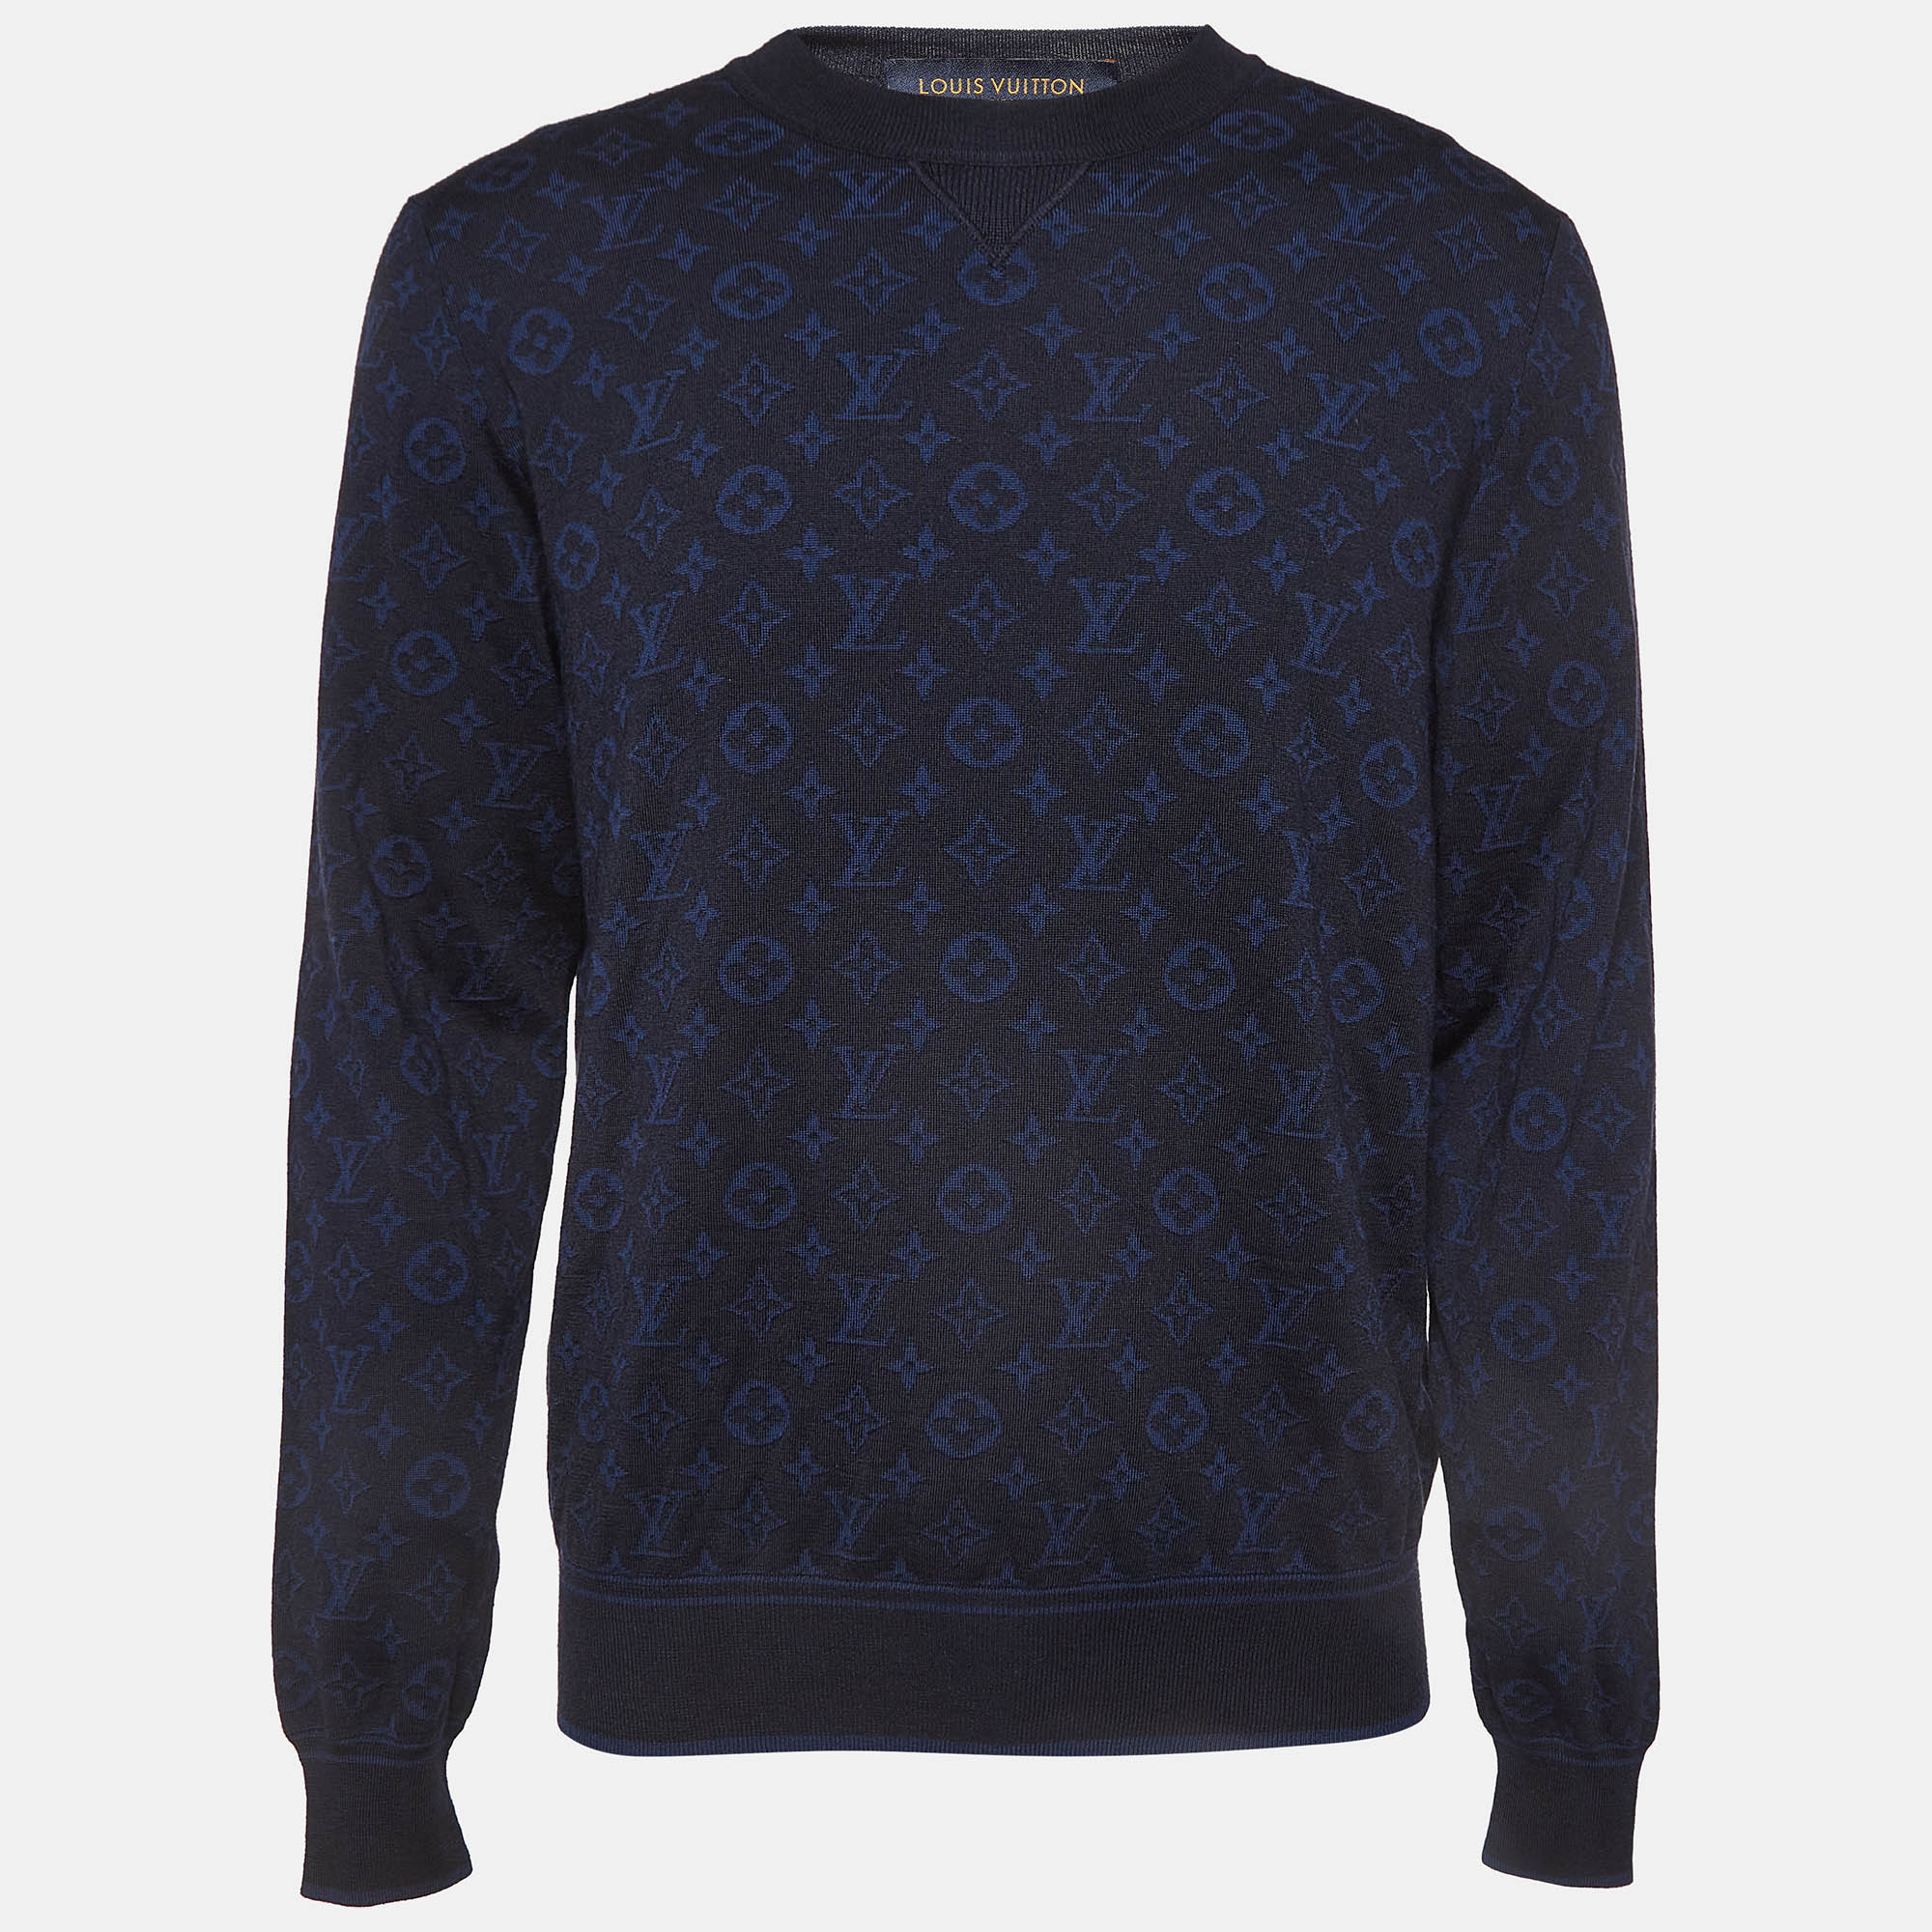 

Louis Vuitton Black & Blue Monogram Print Wool Blend Sweater